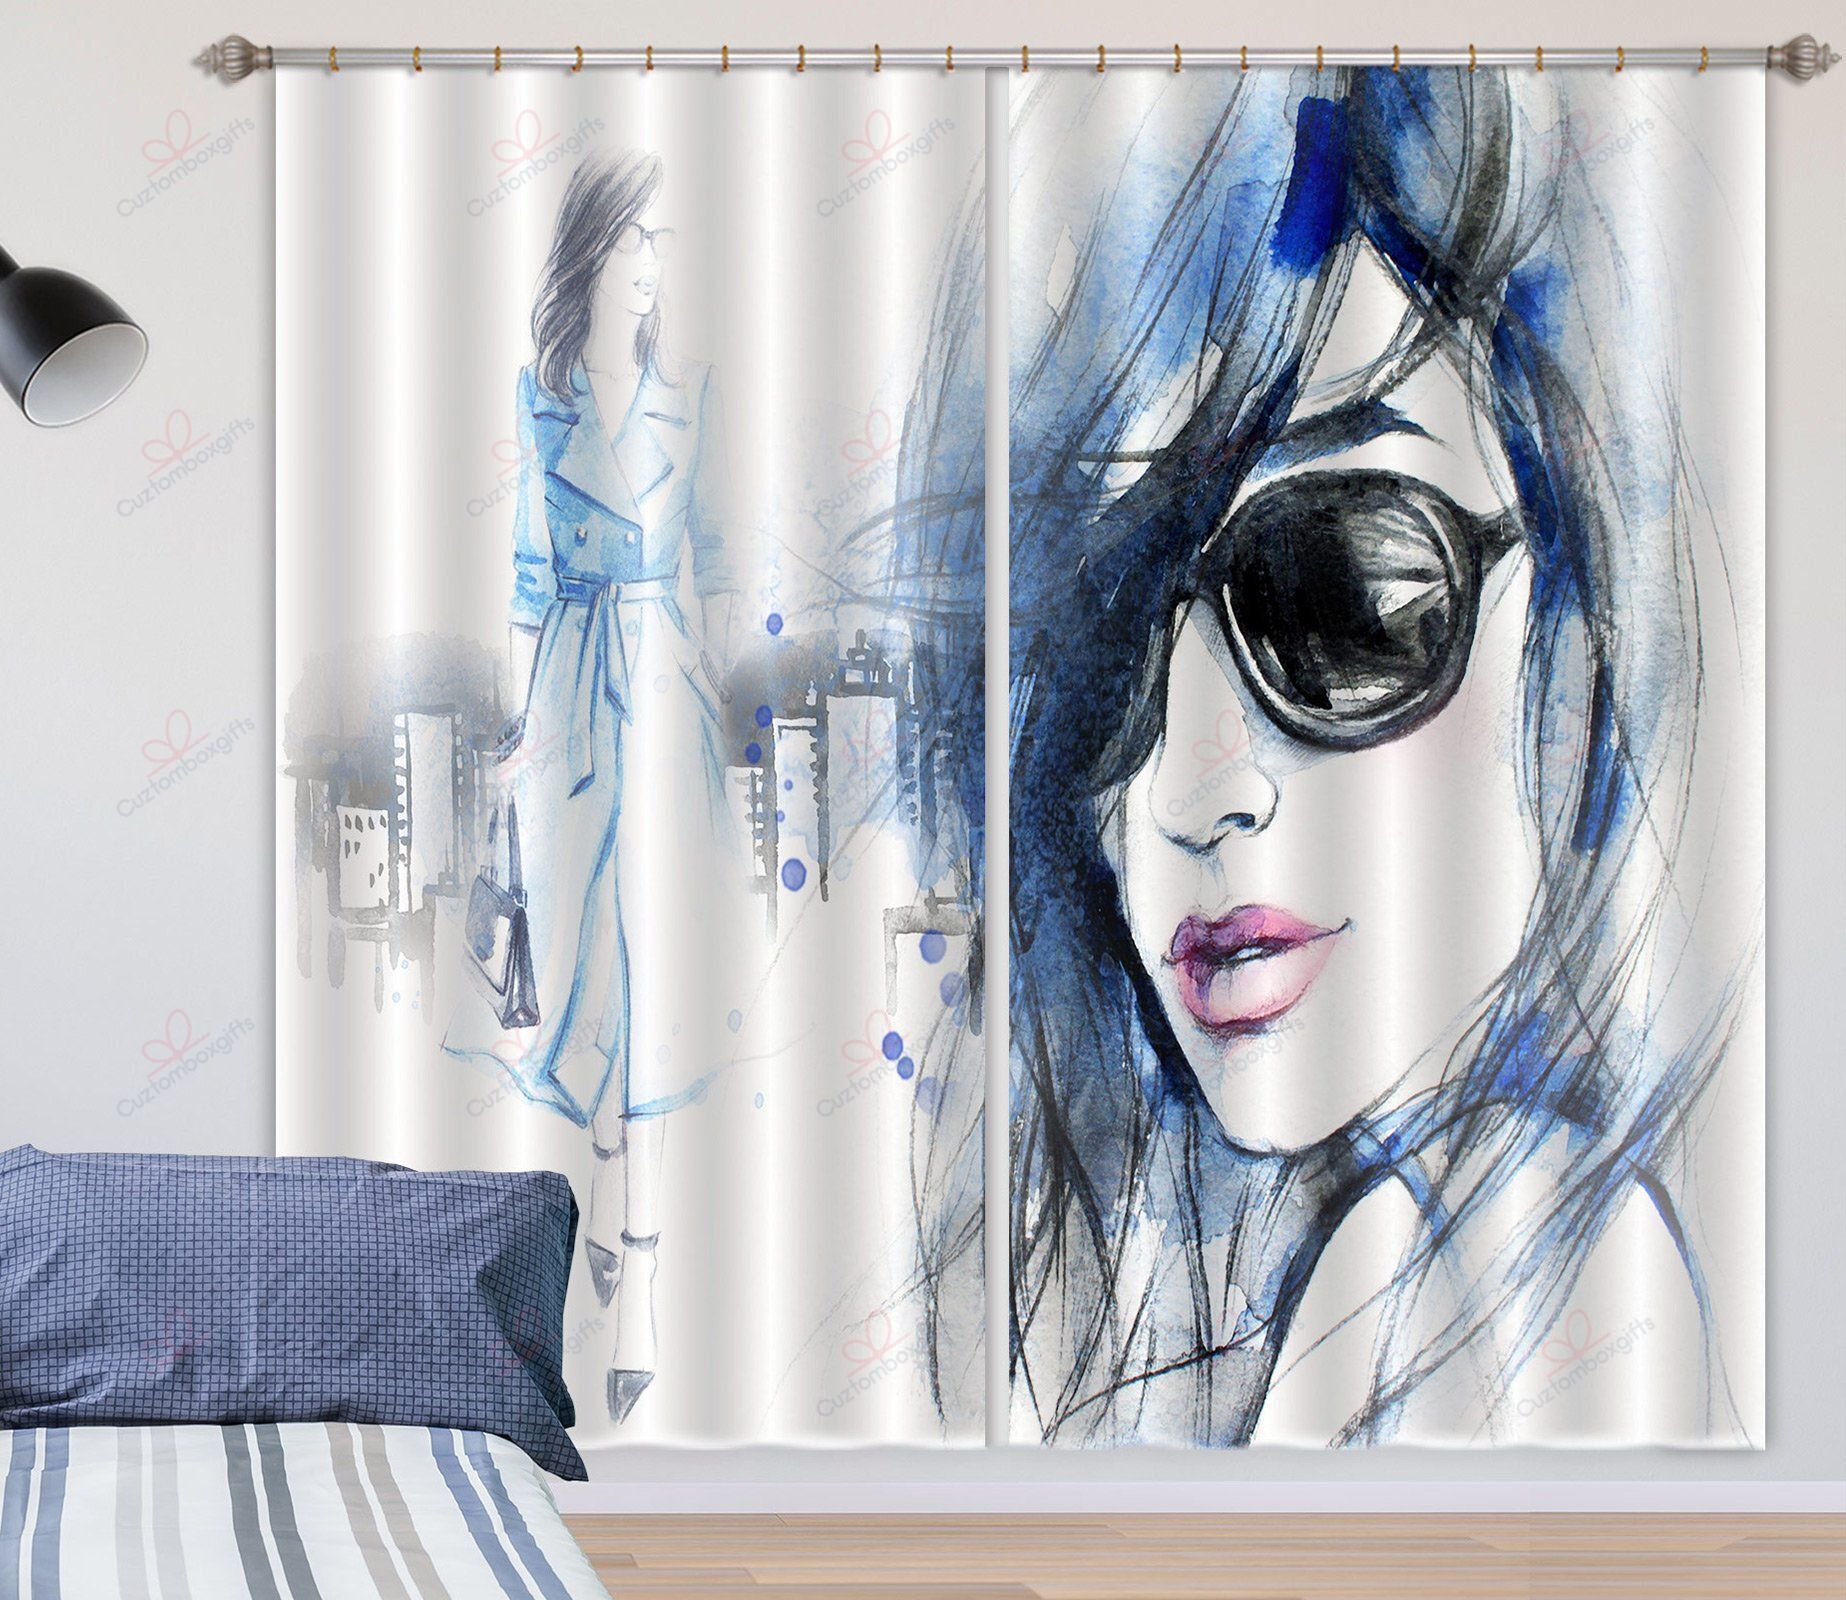 sunglasses girl window curtain home decor 1185